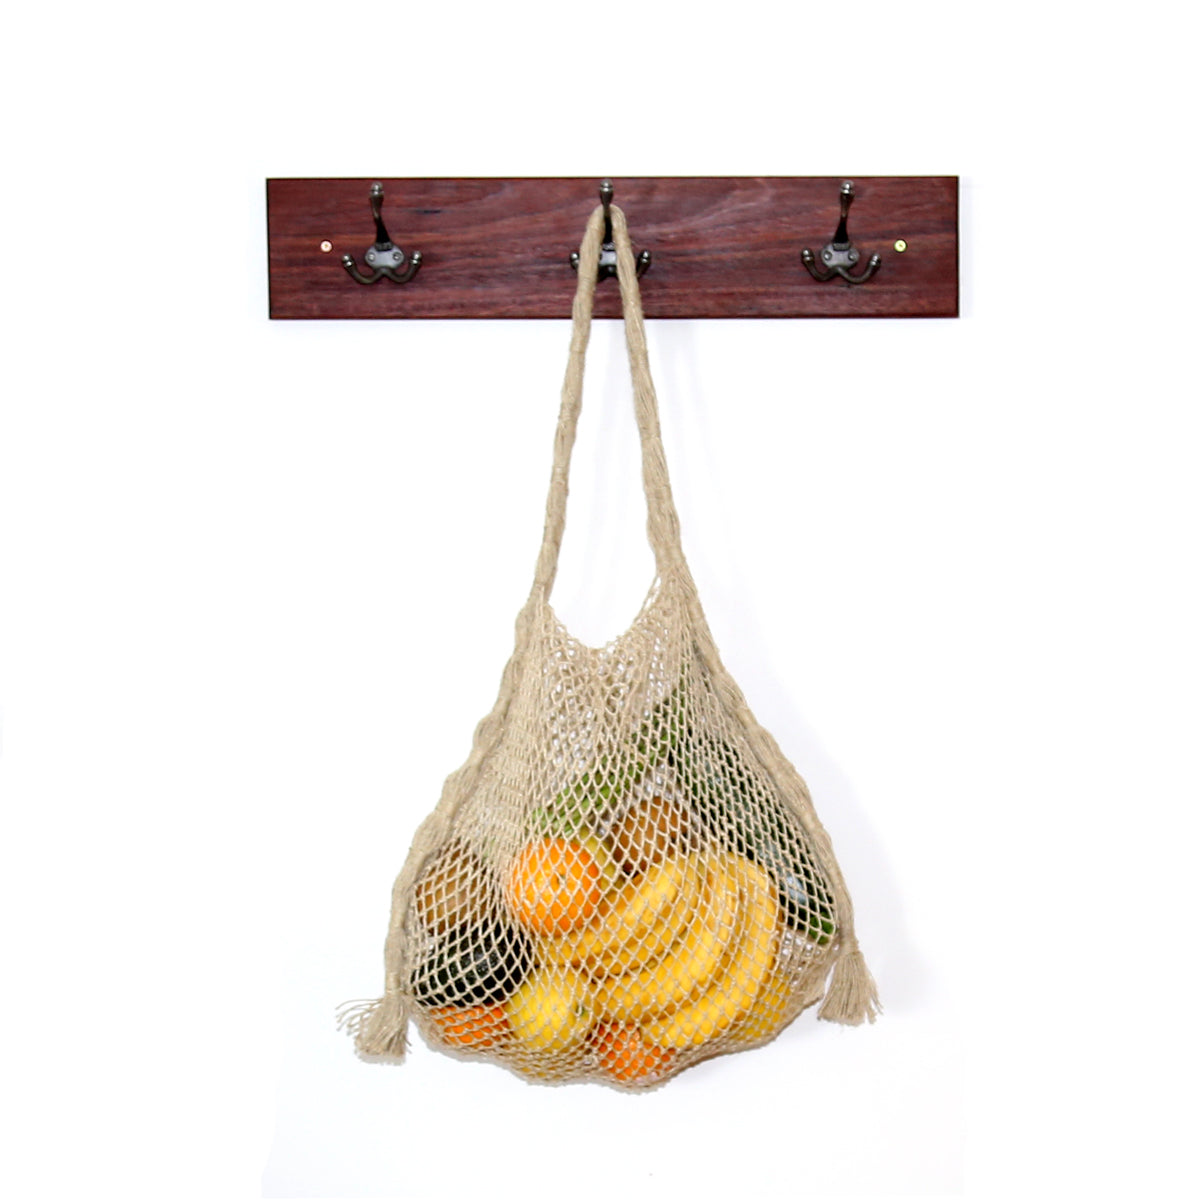 Hand-knotted Grande Natural Hemp String Bag